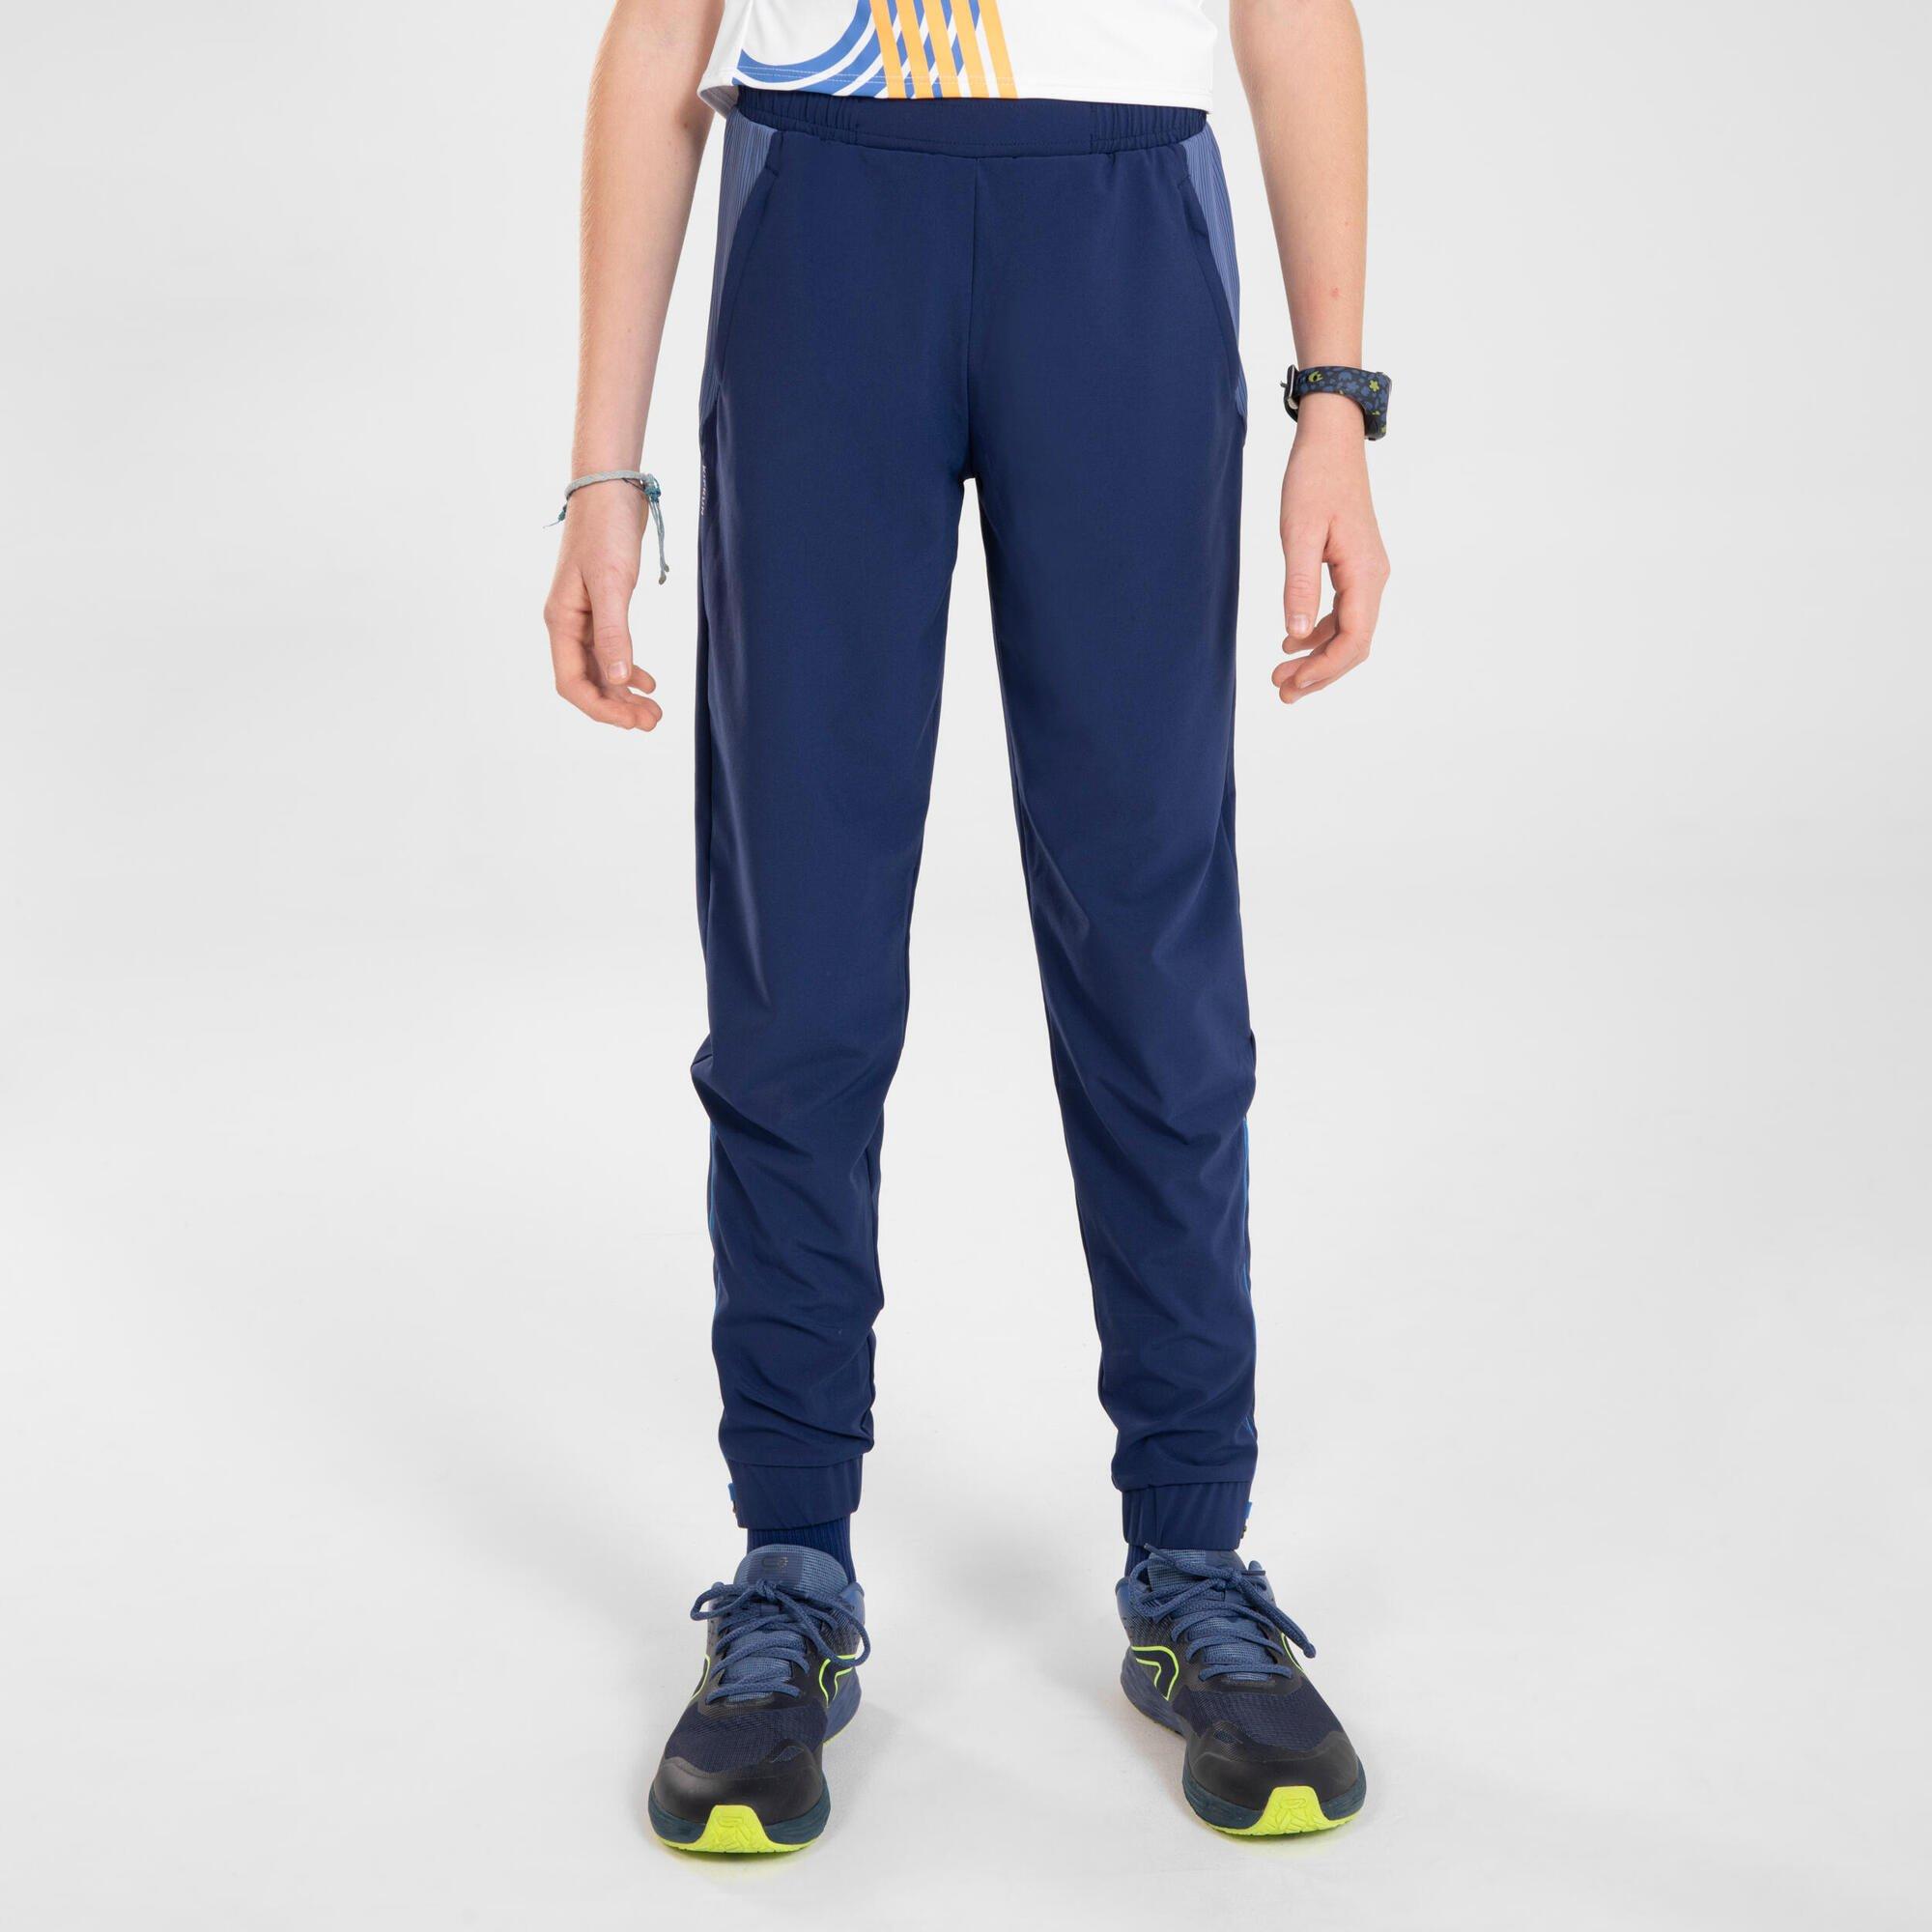 Trousers, Decathlon Kiprun Dry Running Tights